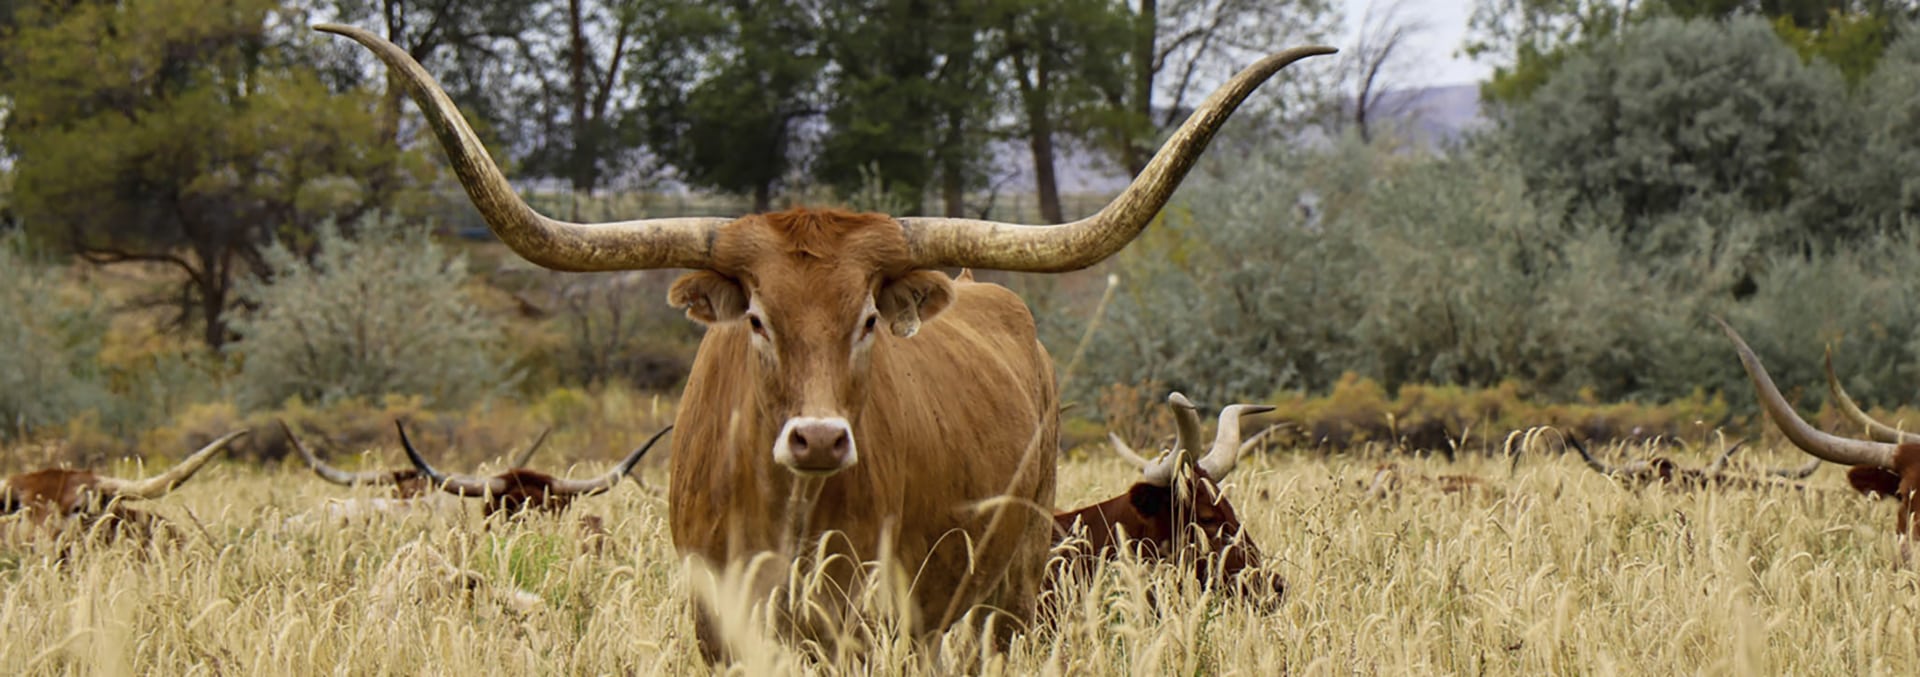 oregon cattle ranch for sale cr longhorn ranch